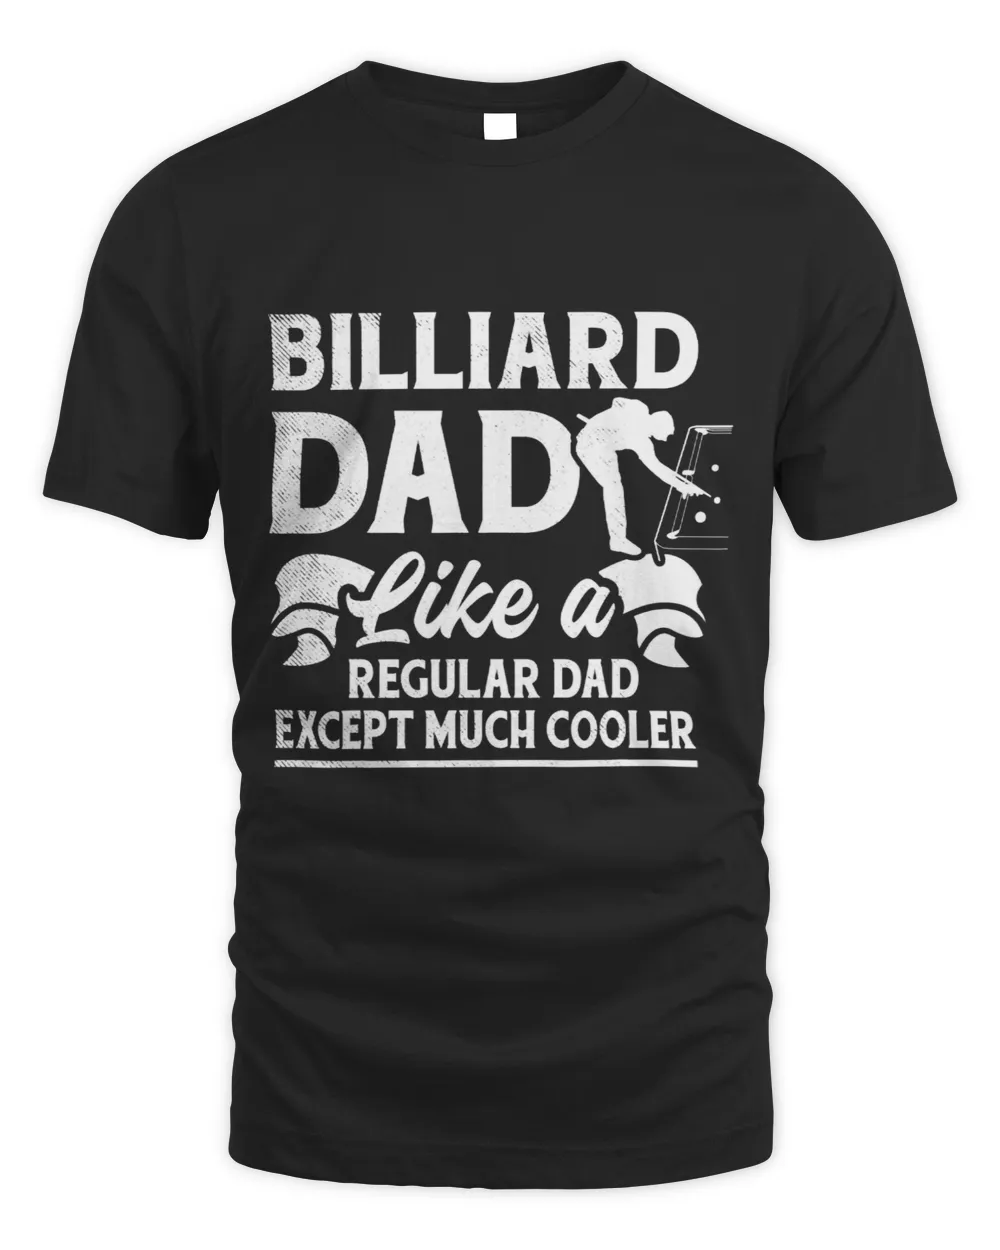 Billiards cooler regular dad funny theme